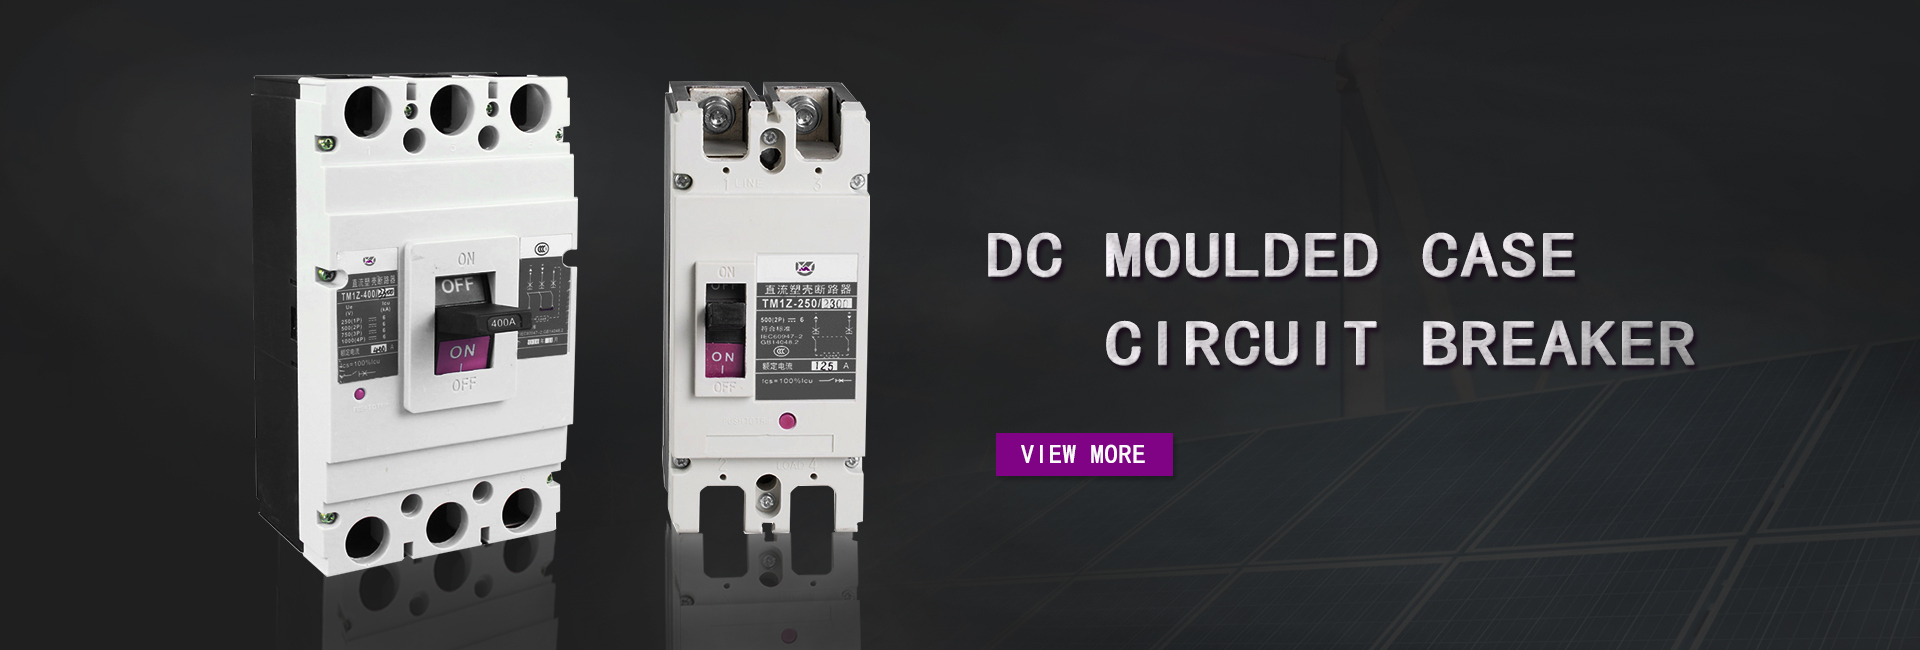 Case Moulded Dc Breaker Circuit